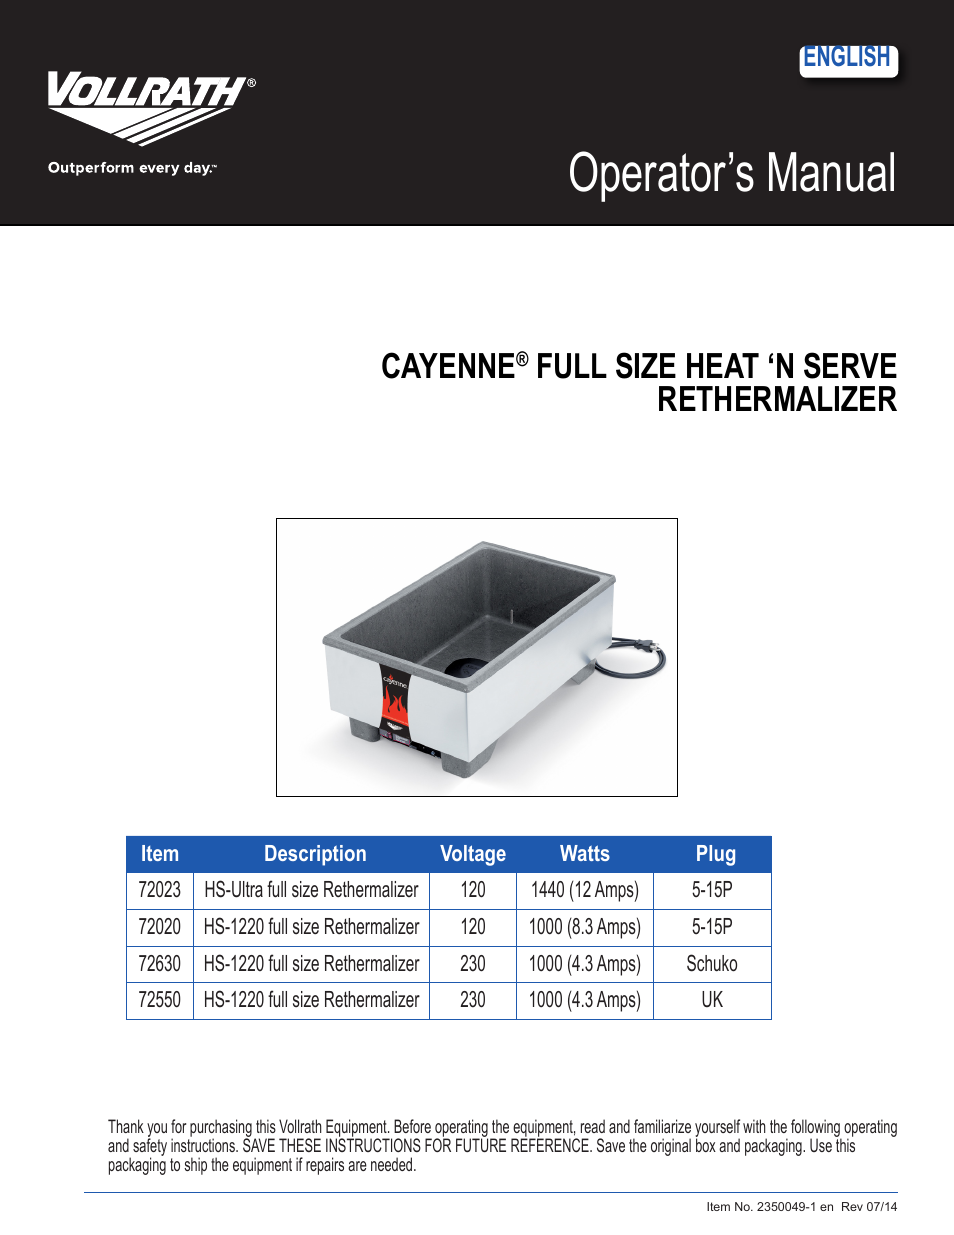 Cayenne Model 1220 Full-Size Heat 'N Serve Rethermalizers